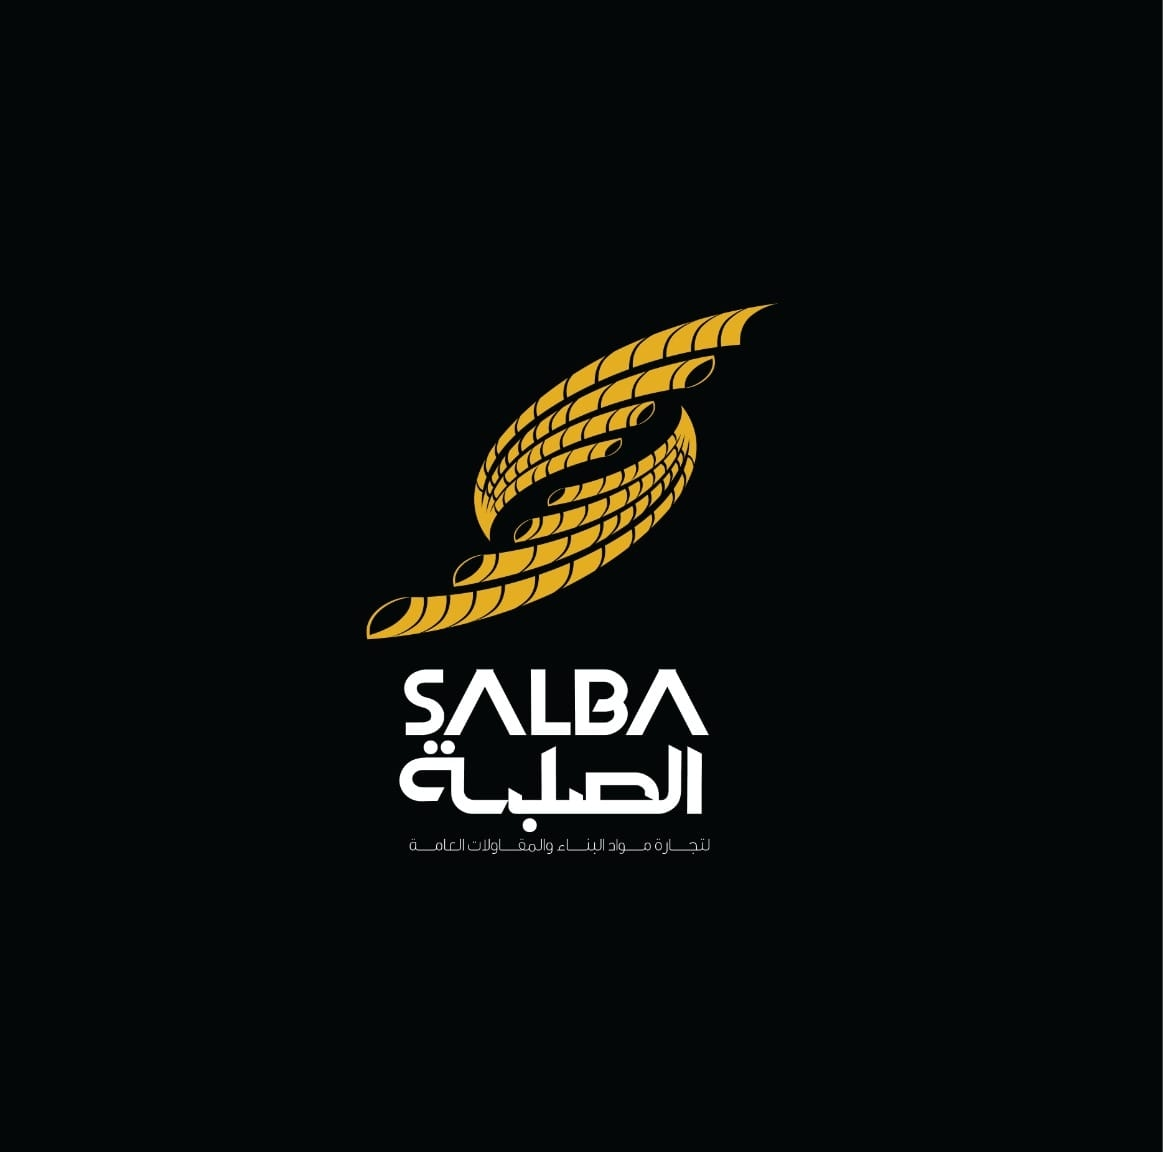 Marketing for steel company in Egypt – Al-Salba